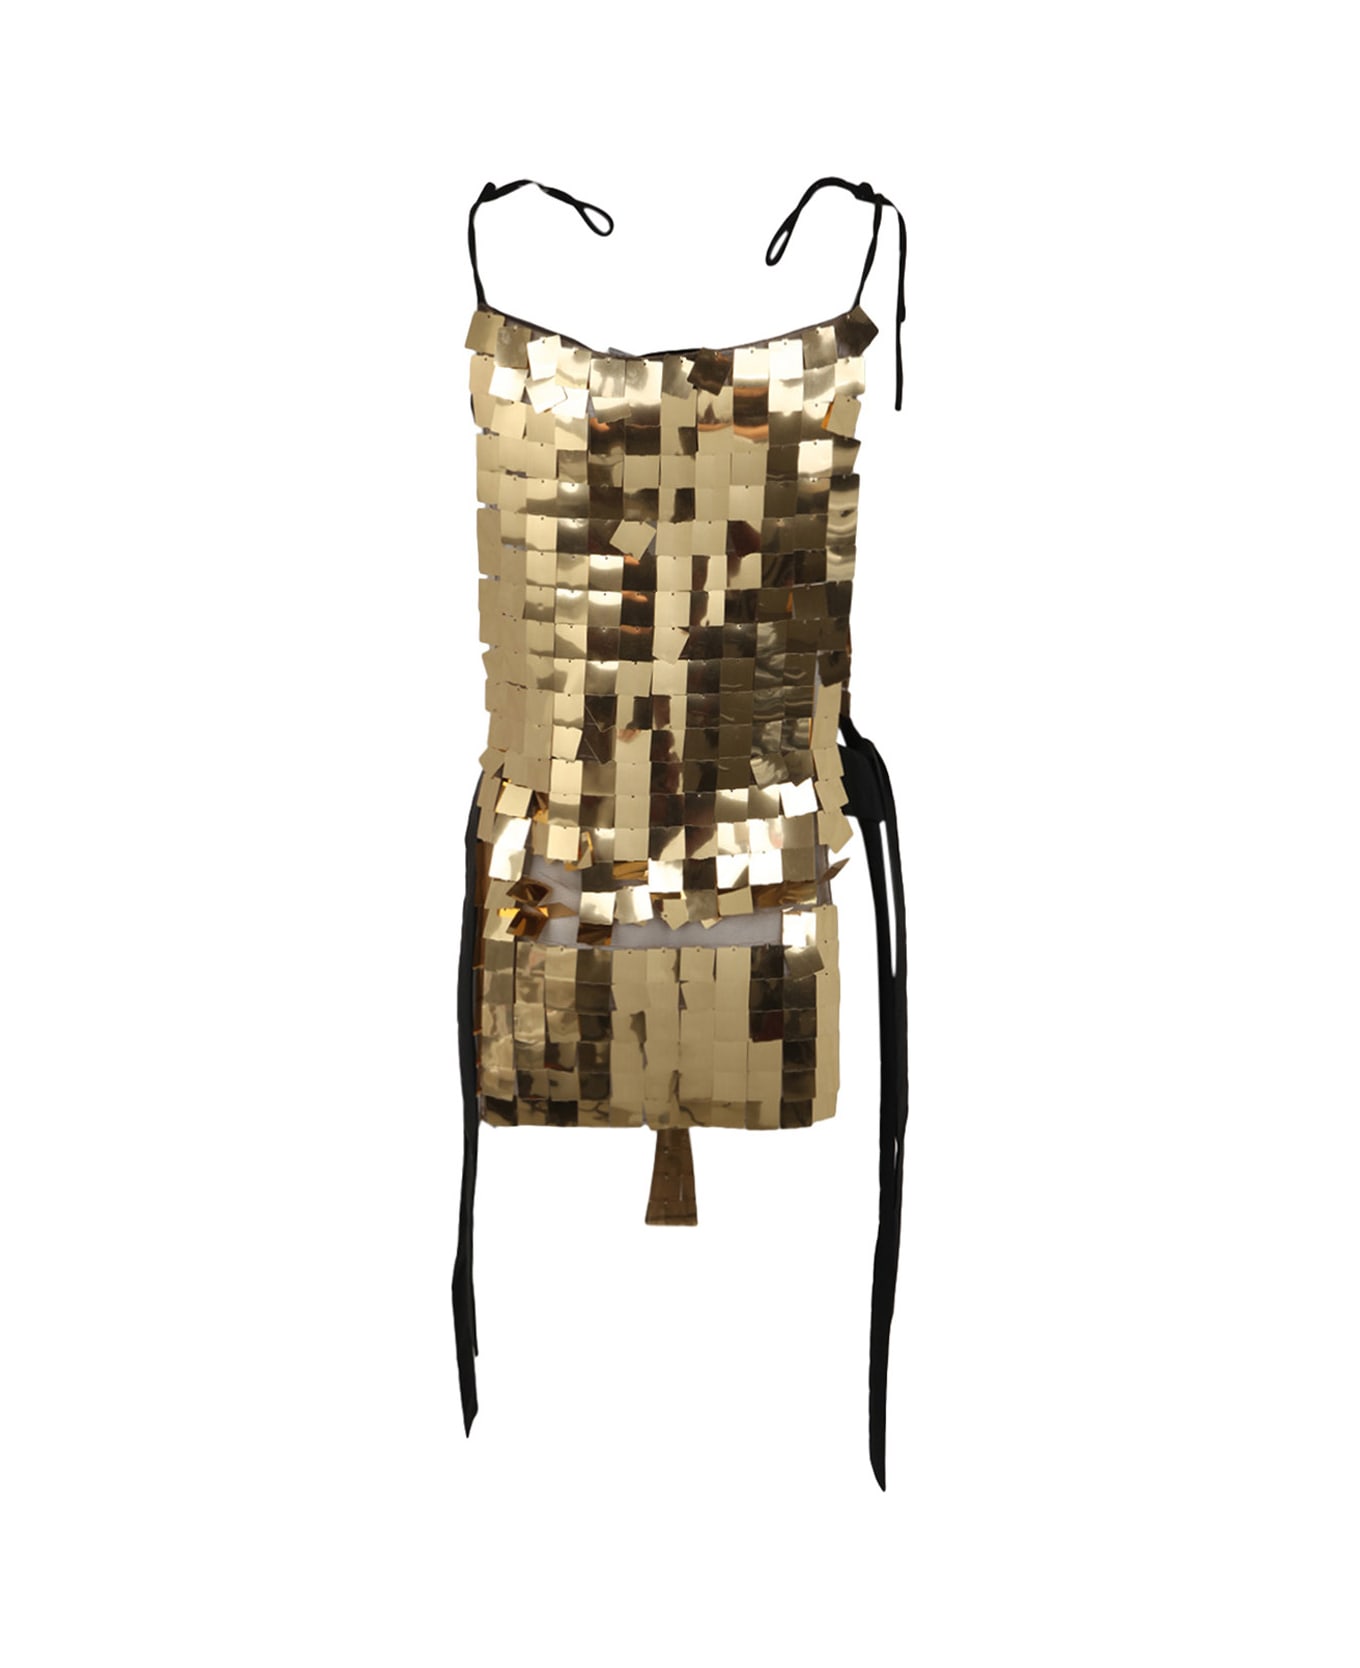 Maria Calderara Corazza Macro Square Sequins On Tulle Dress - Gold Black Taffeta Ribbons